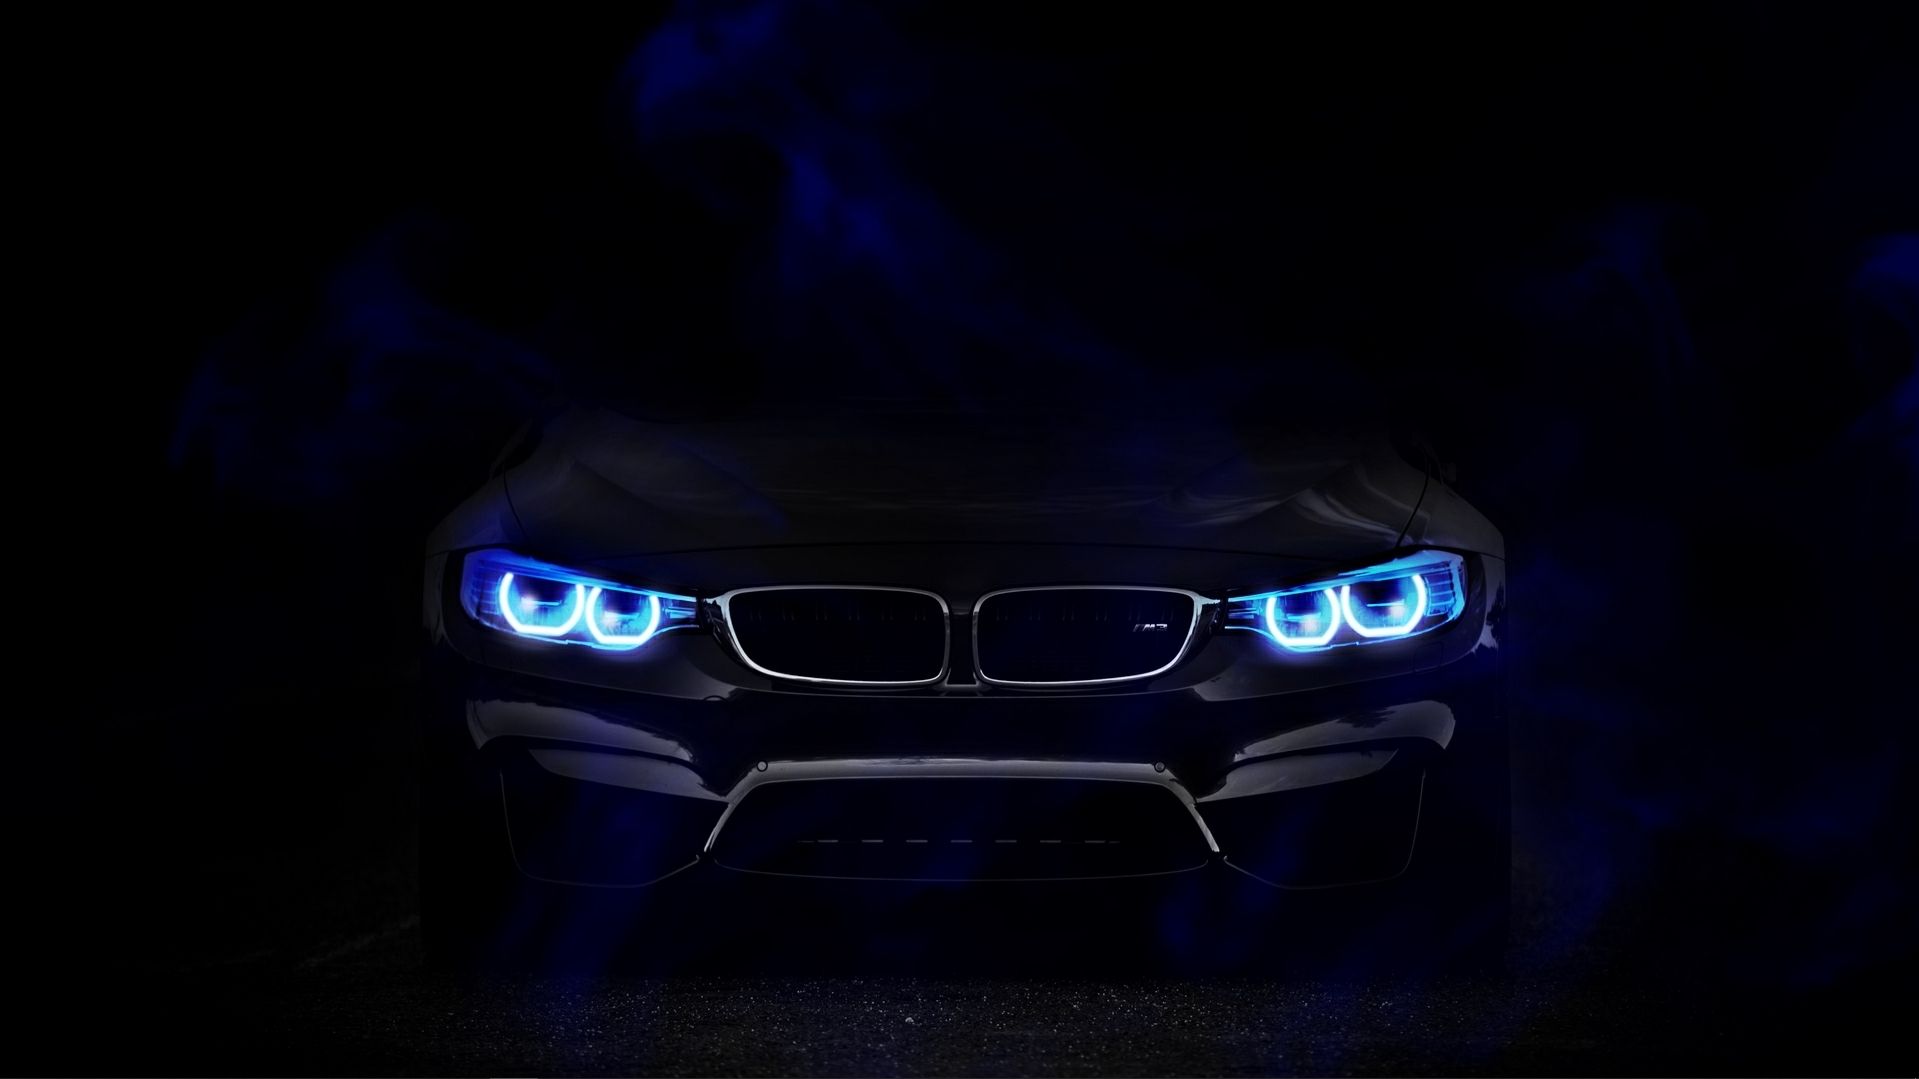 BMW headlights live wallpaper [DOWNLOAD FREE]